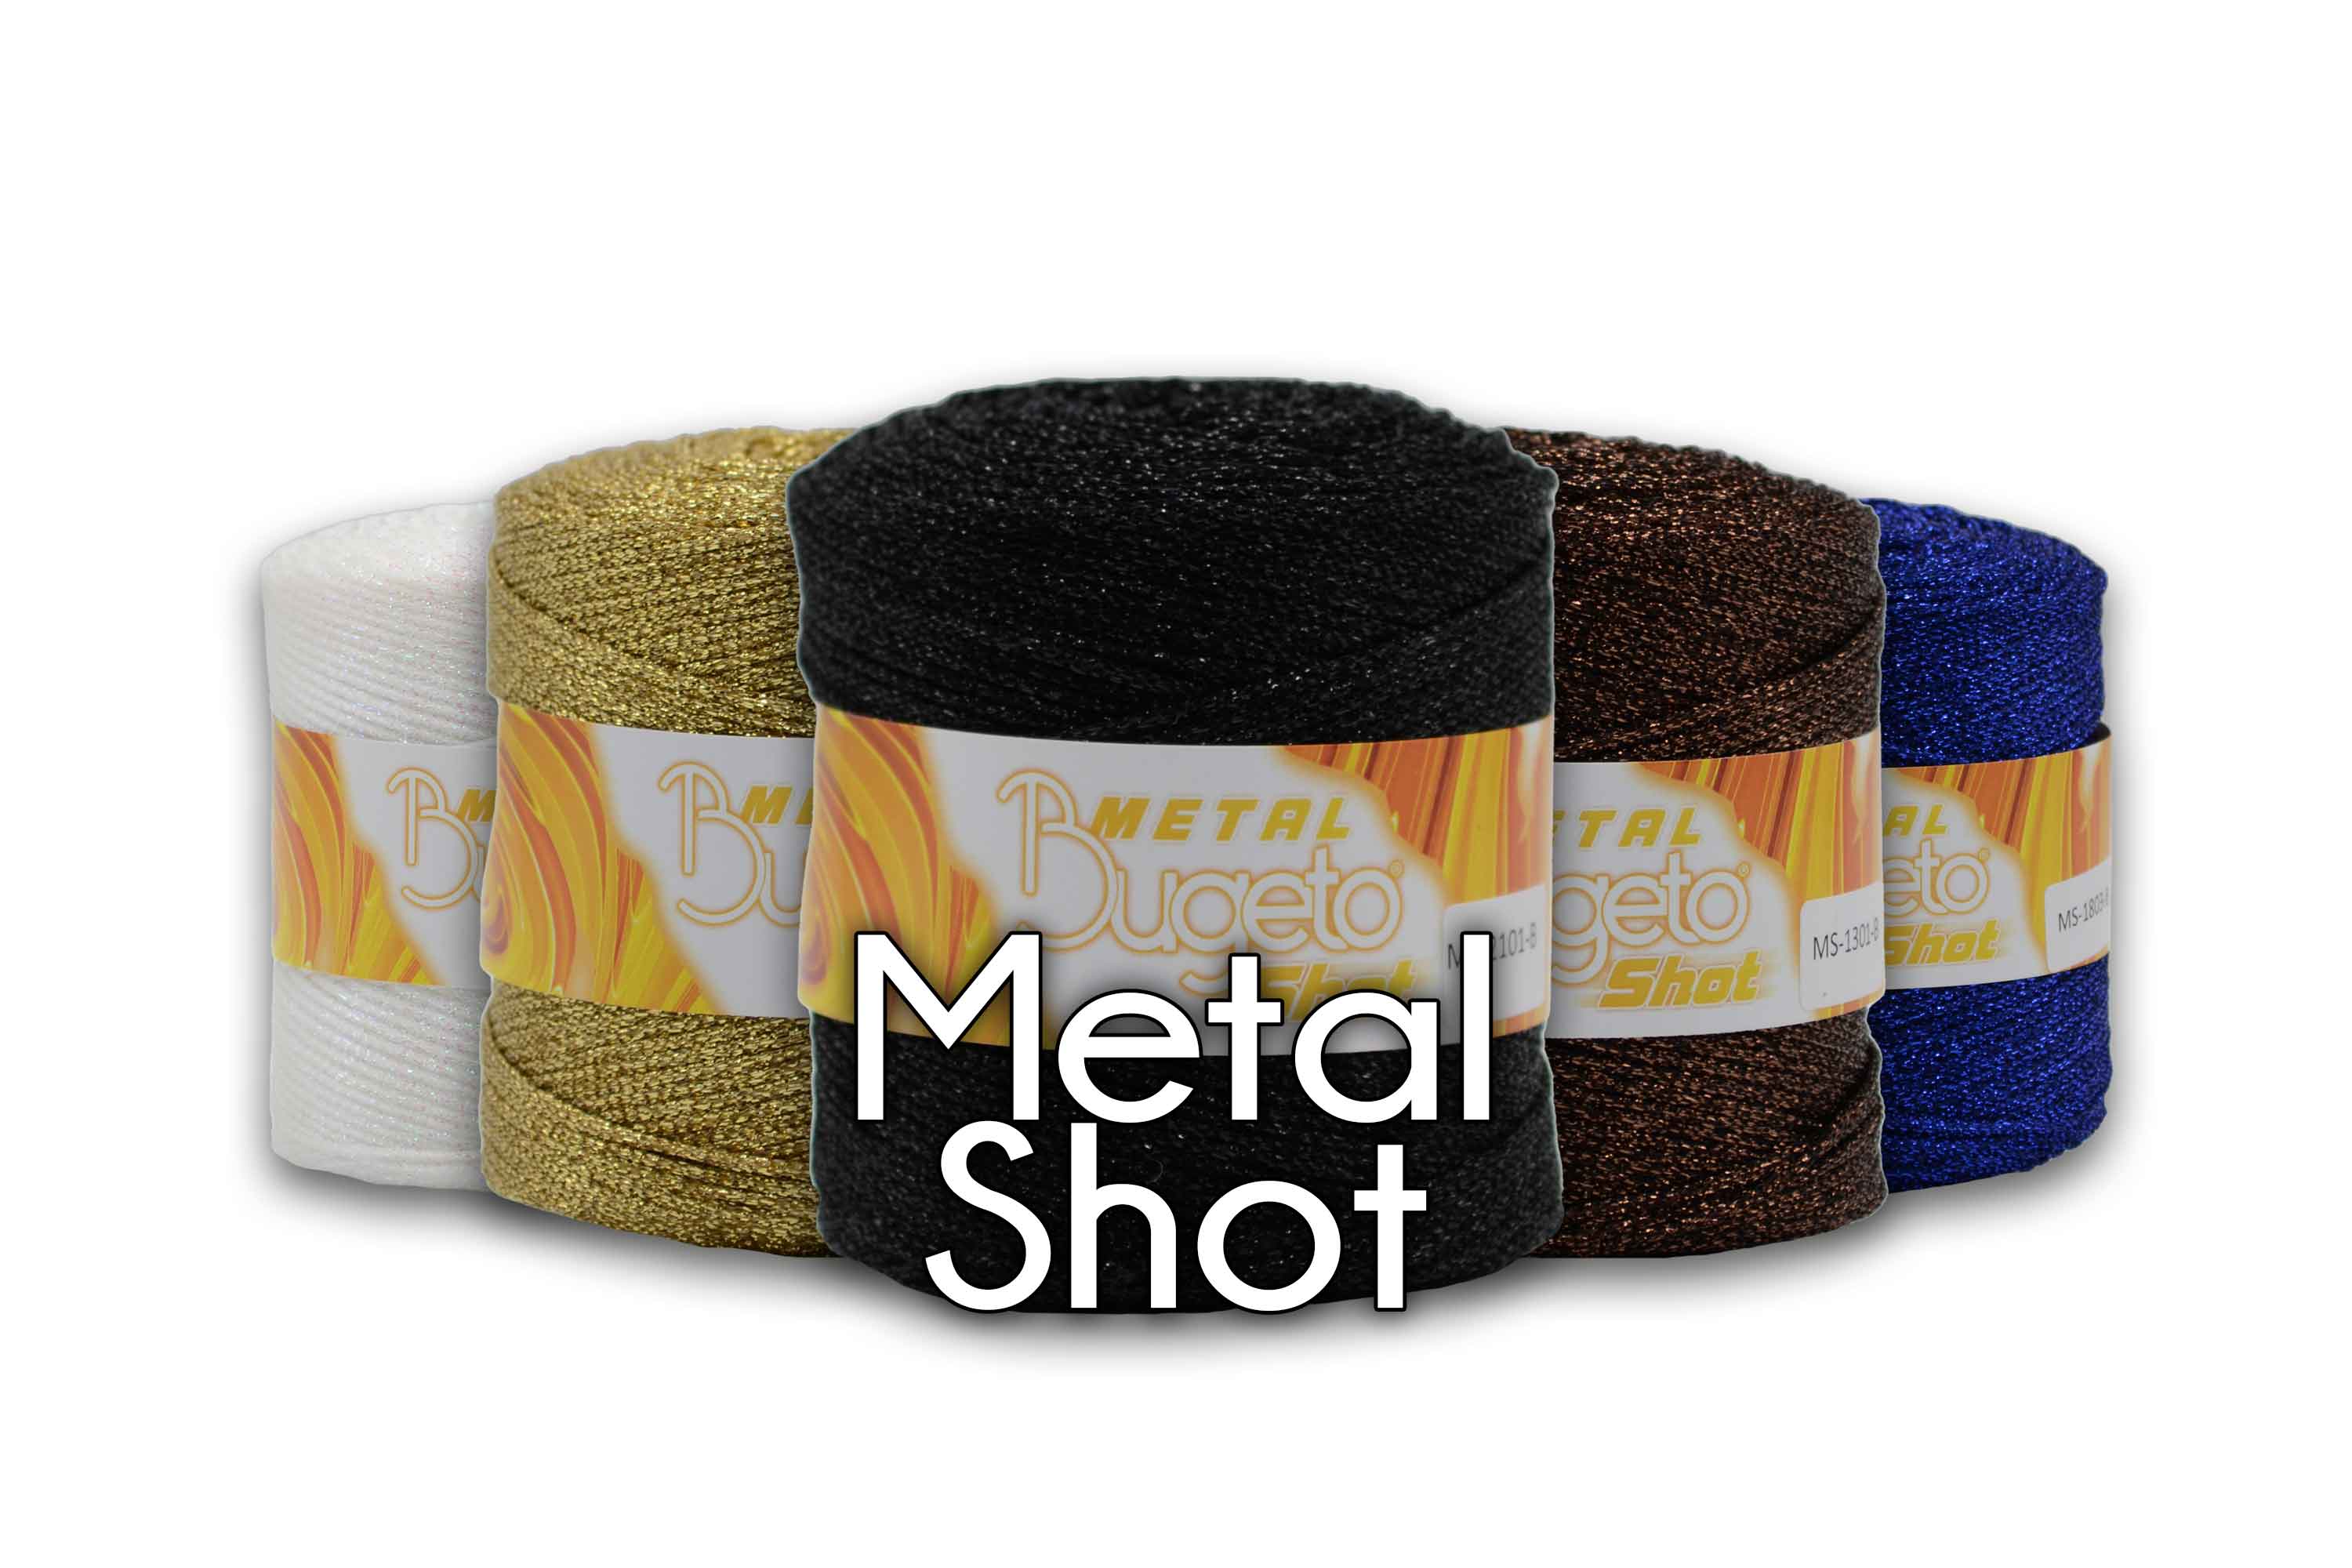 metallic yarn metal shot cotton metal mixed yarns bugeto yarn